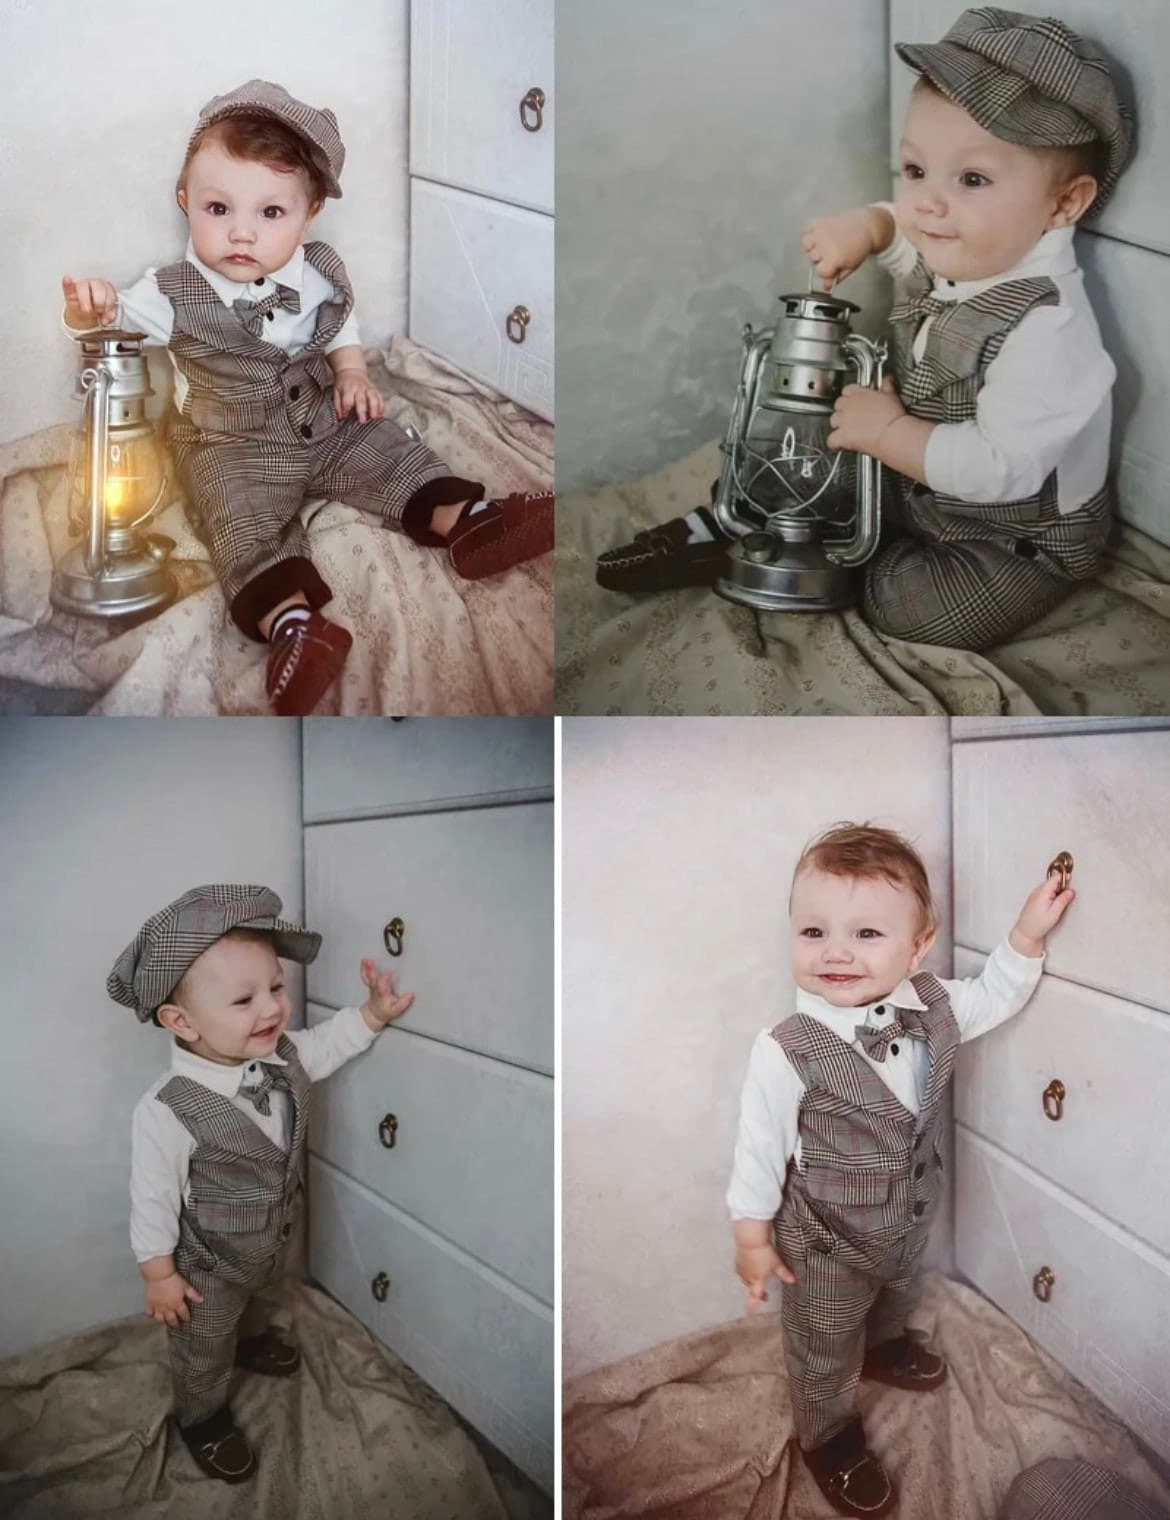 Lavida  - Baby Boy Suit Set.